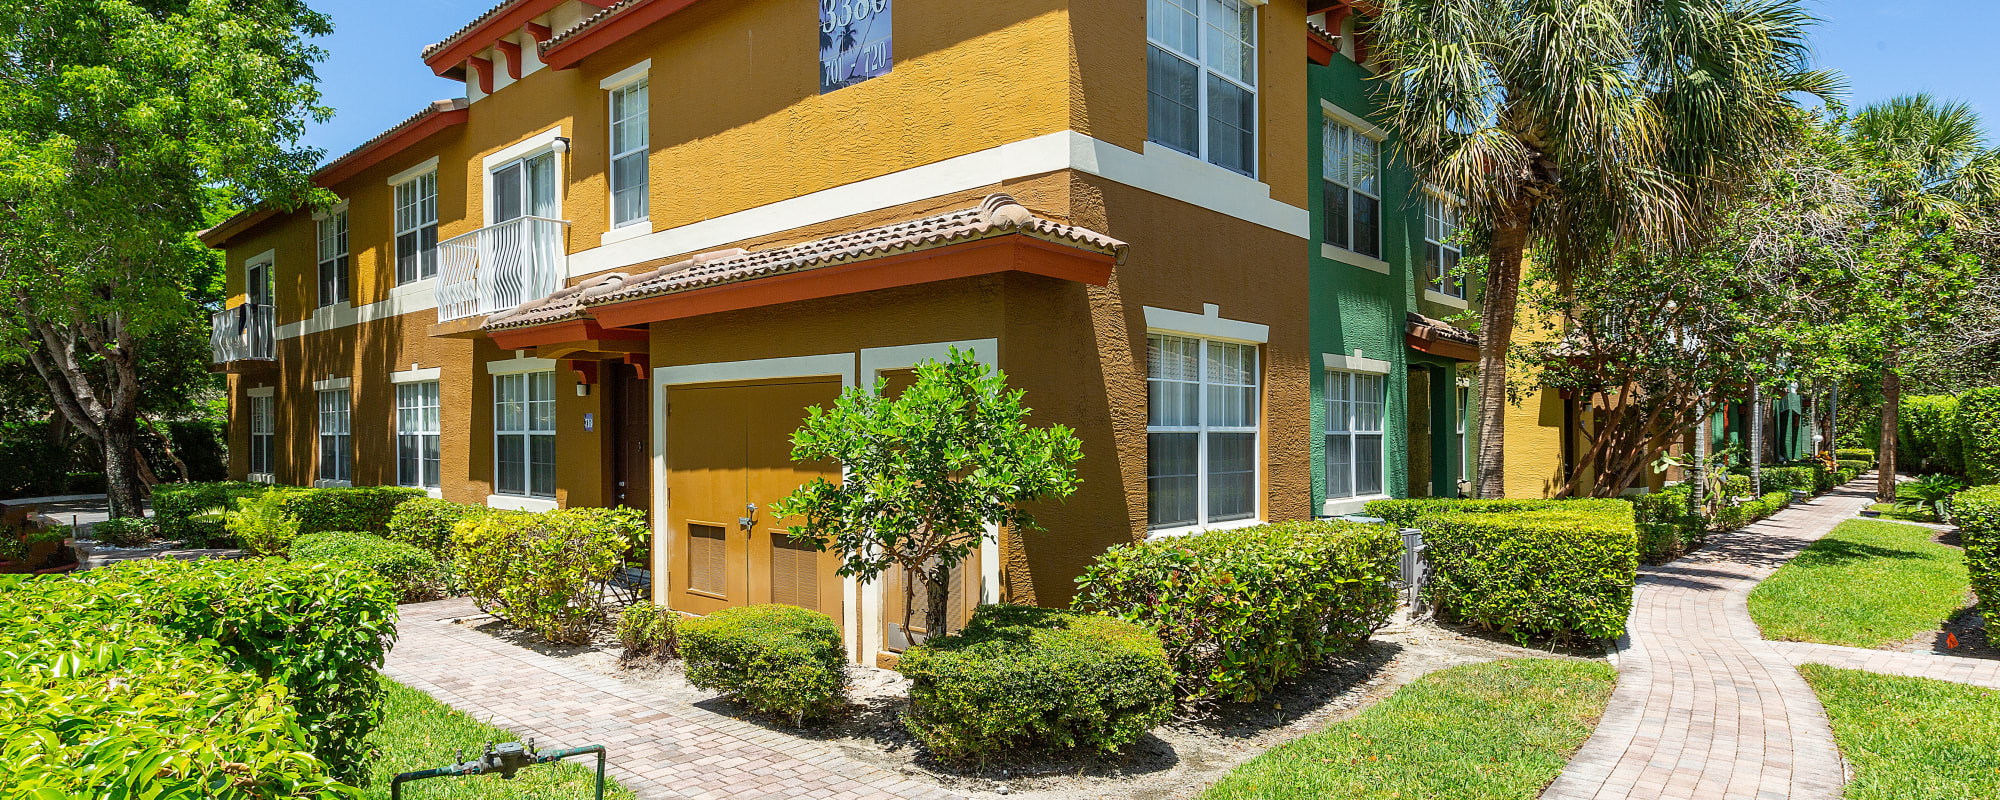 Contact us at Delray Bay Apartments in Delray Beach, Florida